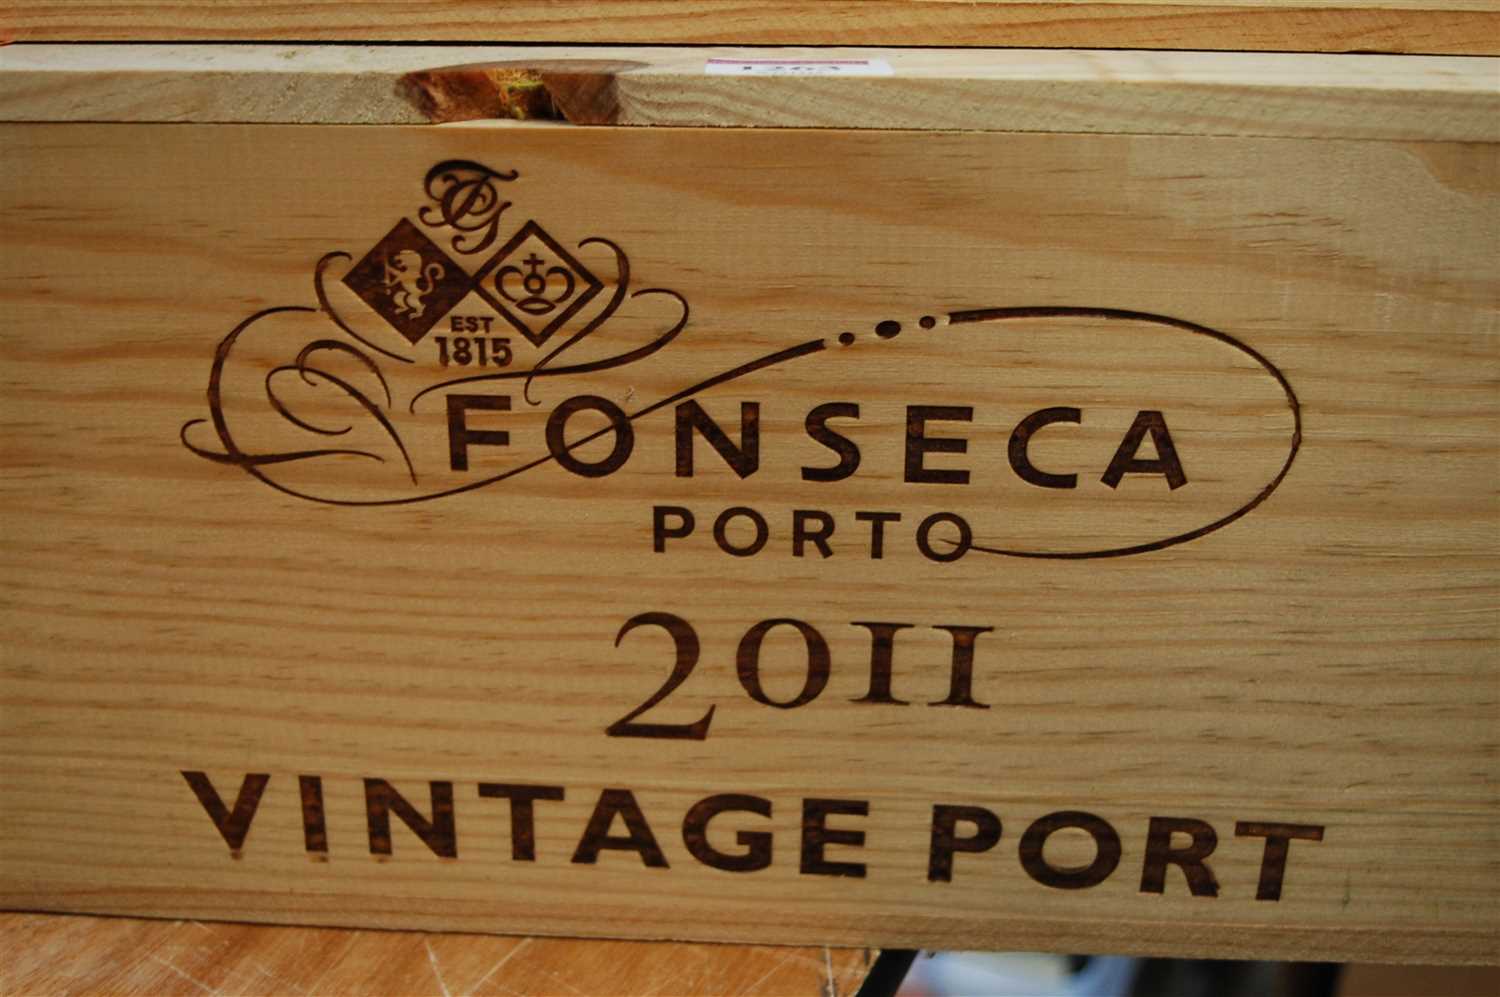 Lot 1263 - Fonseca, 2011 vintage port, six bottles (OWC)